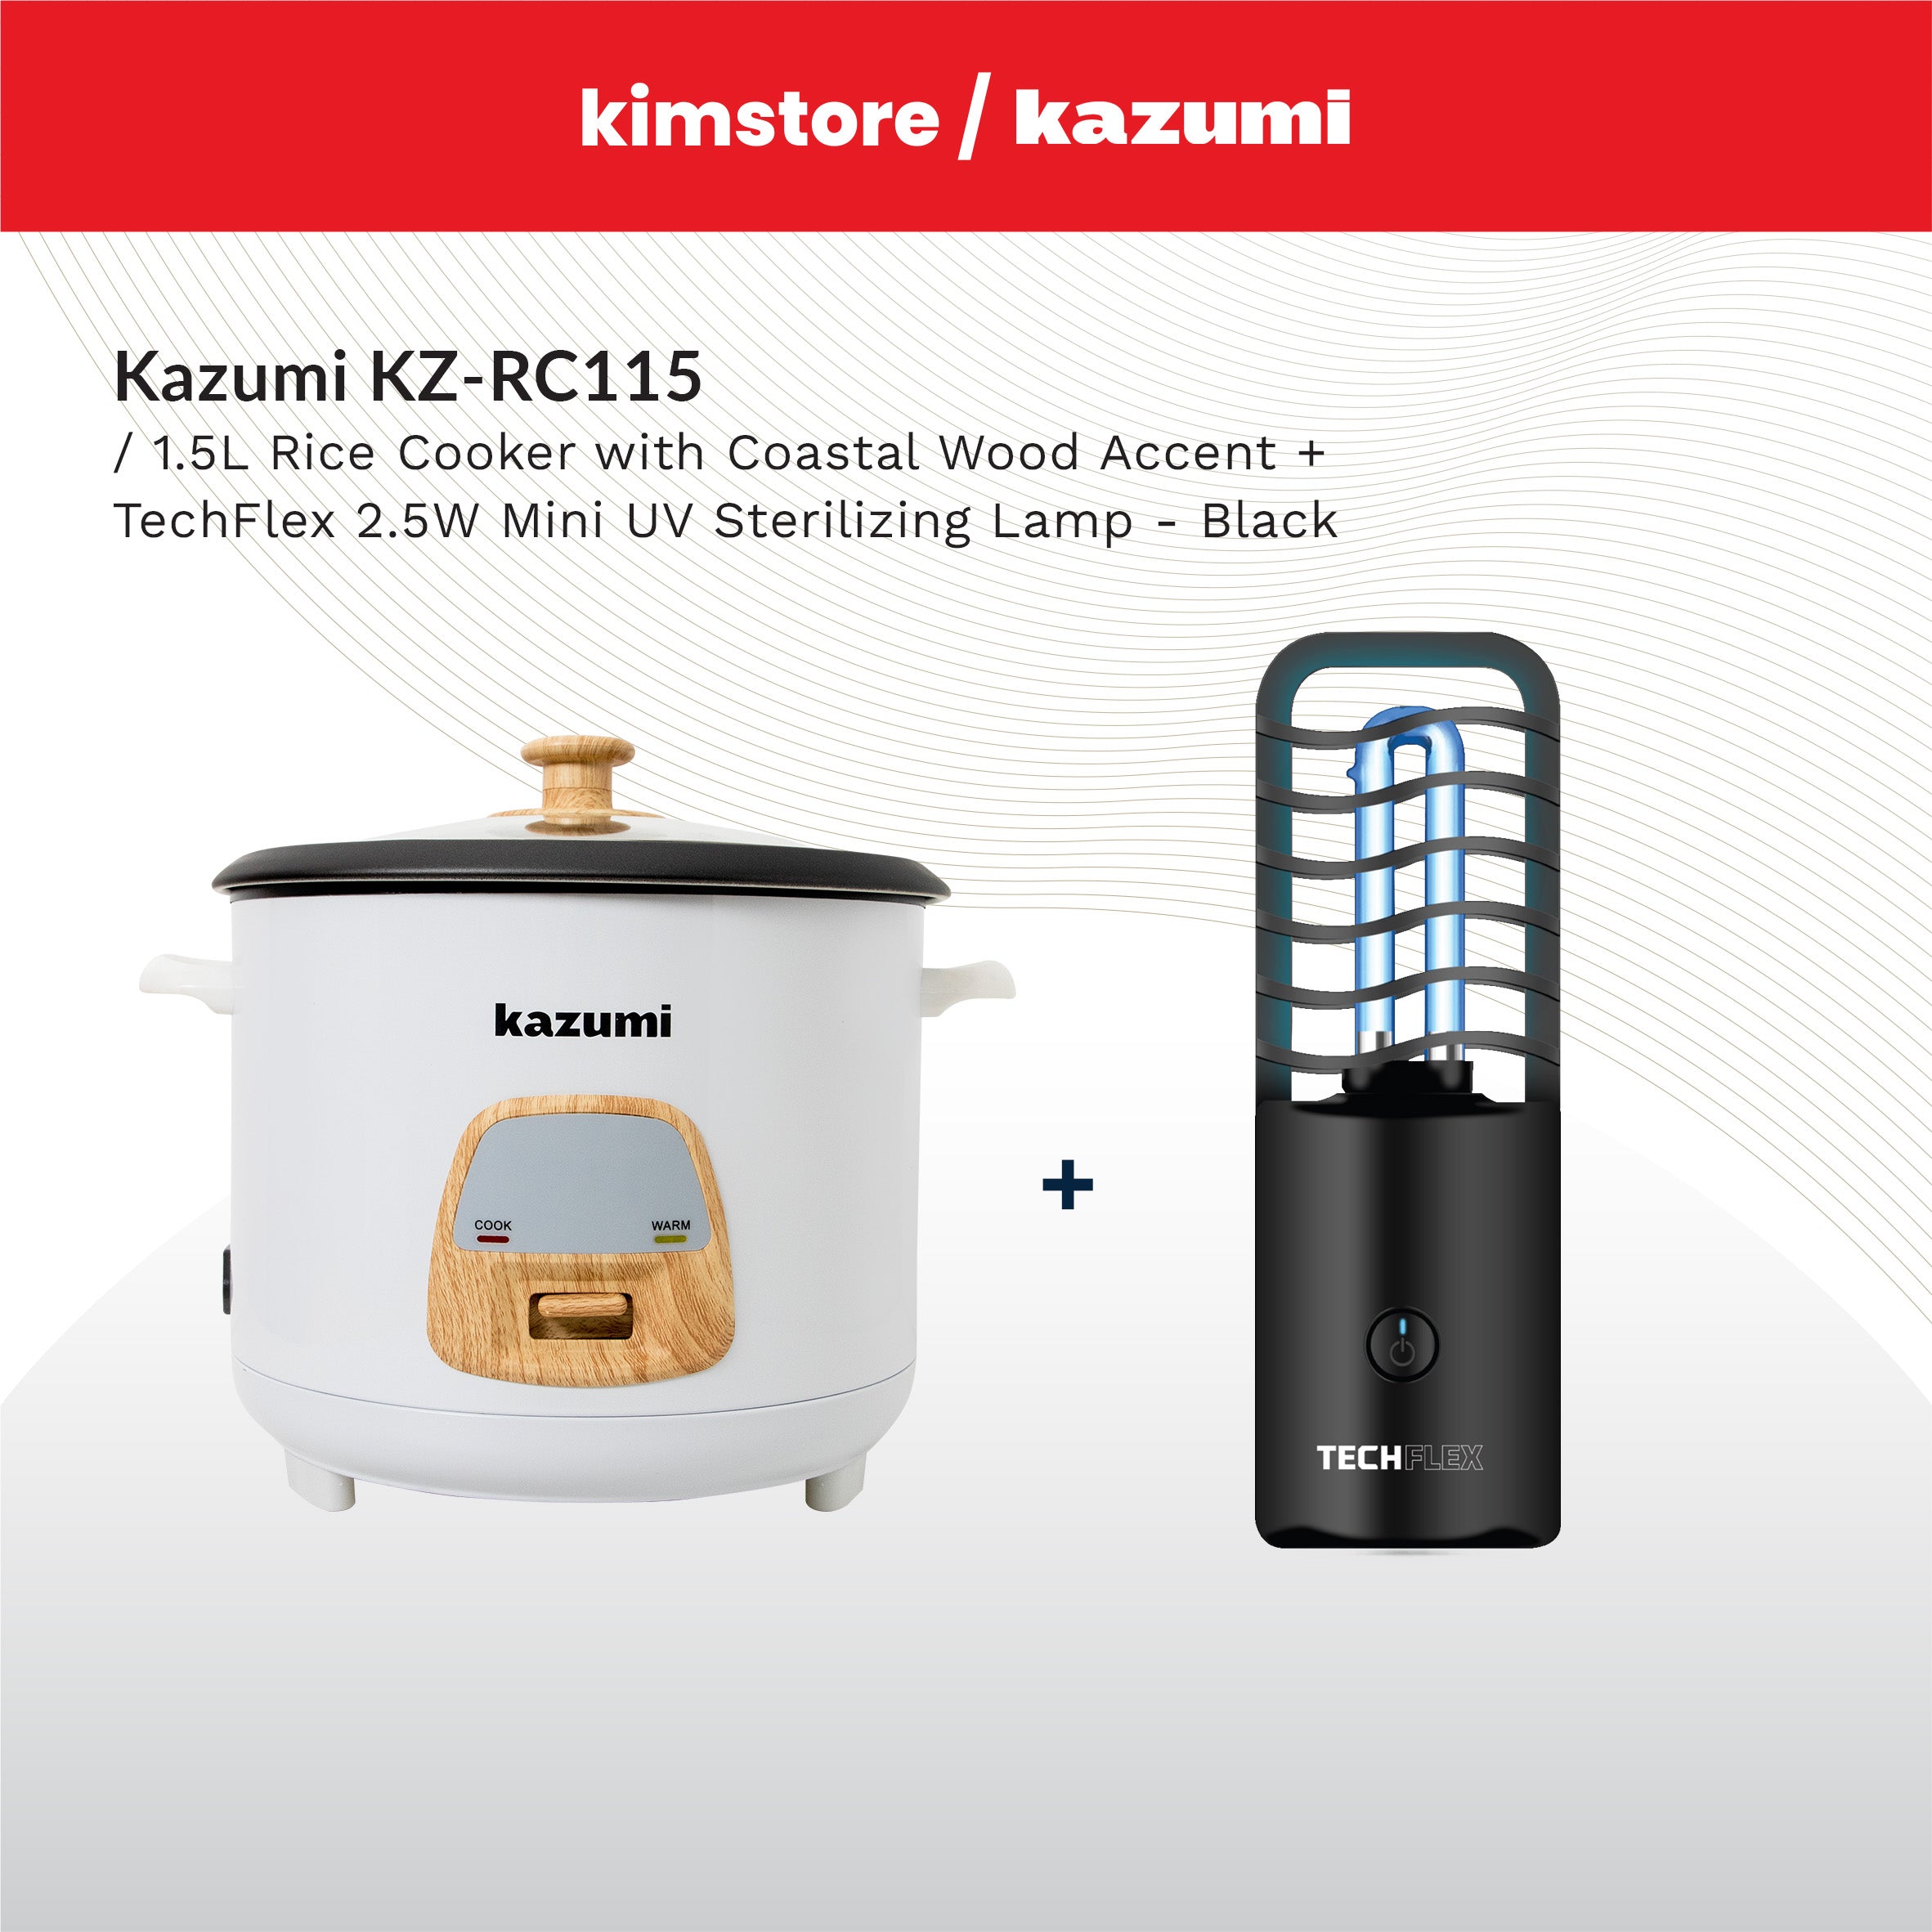 BUNDLE: Kazumi KZ-RC115 1.5L Rice Cooker + TechFlex 2.5W Mini UV Sterilizing Lamp (Black)